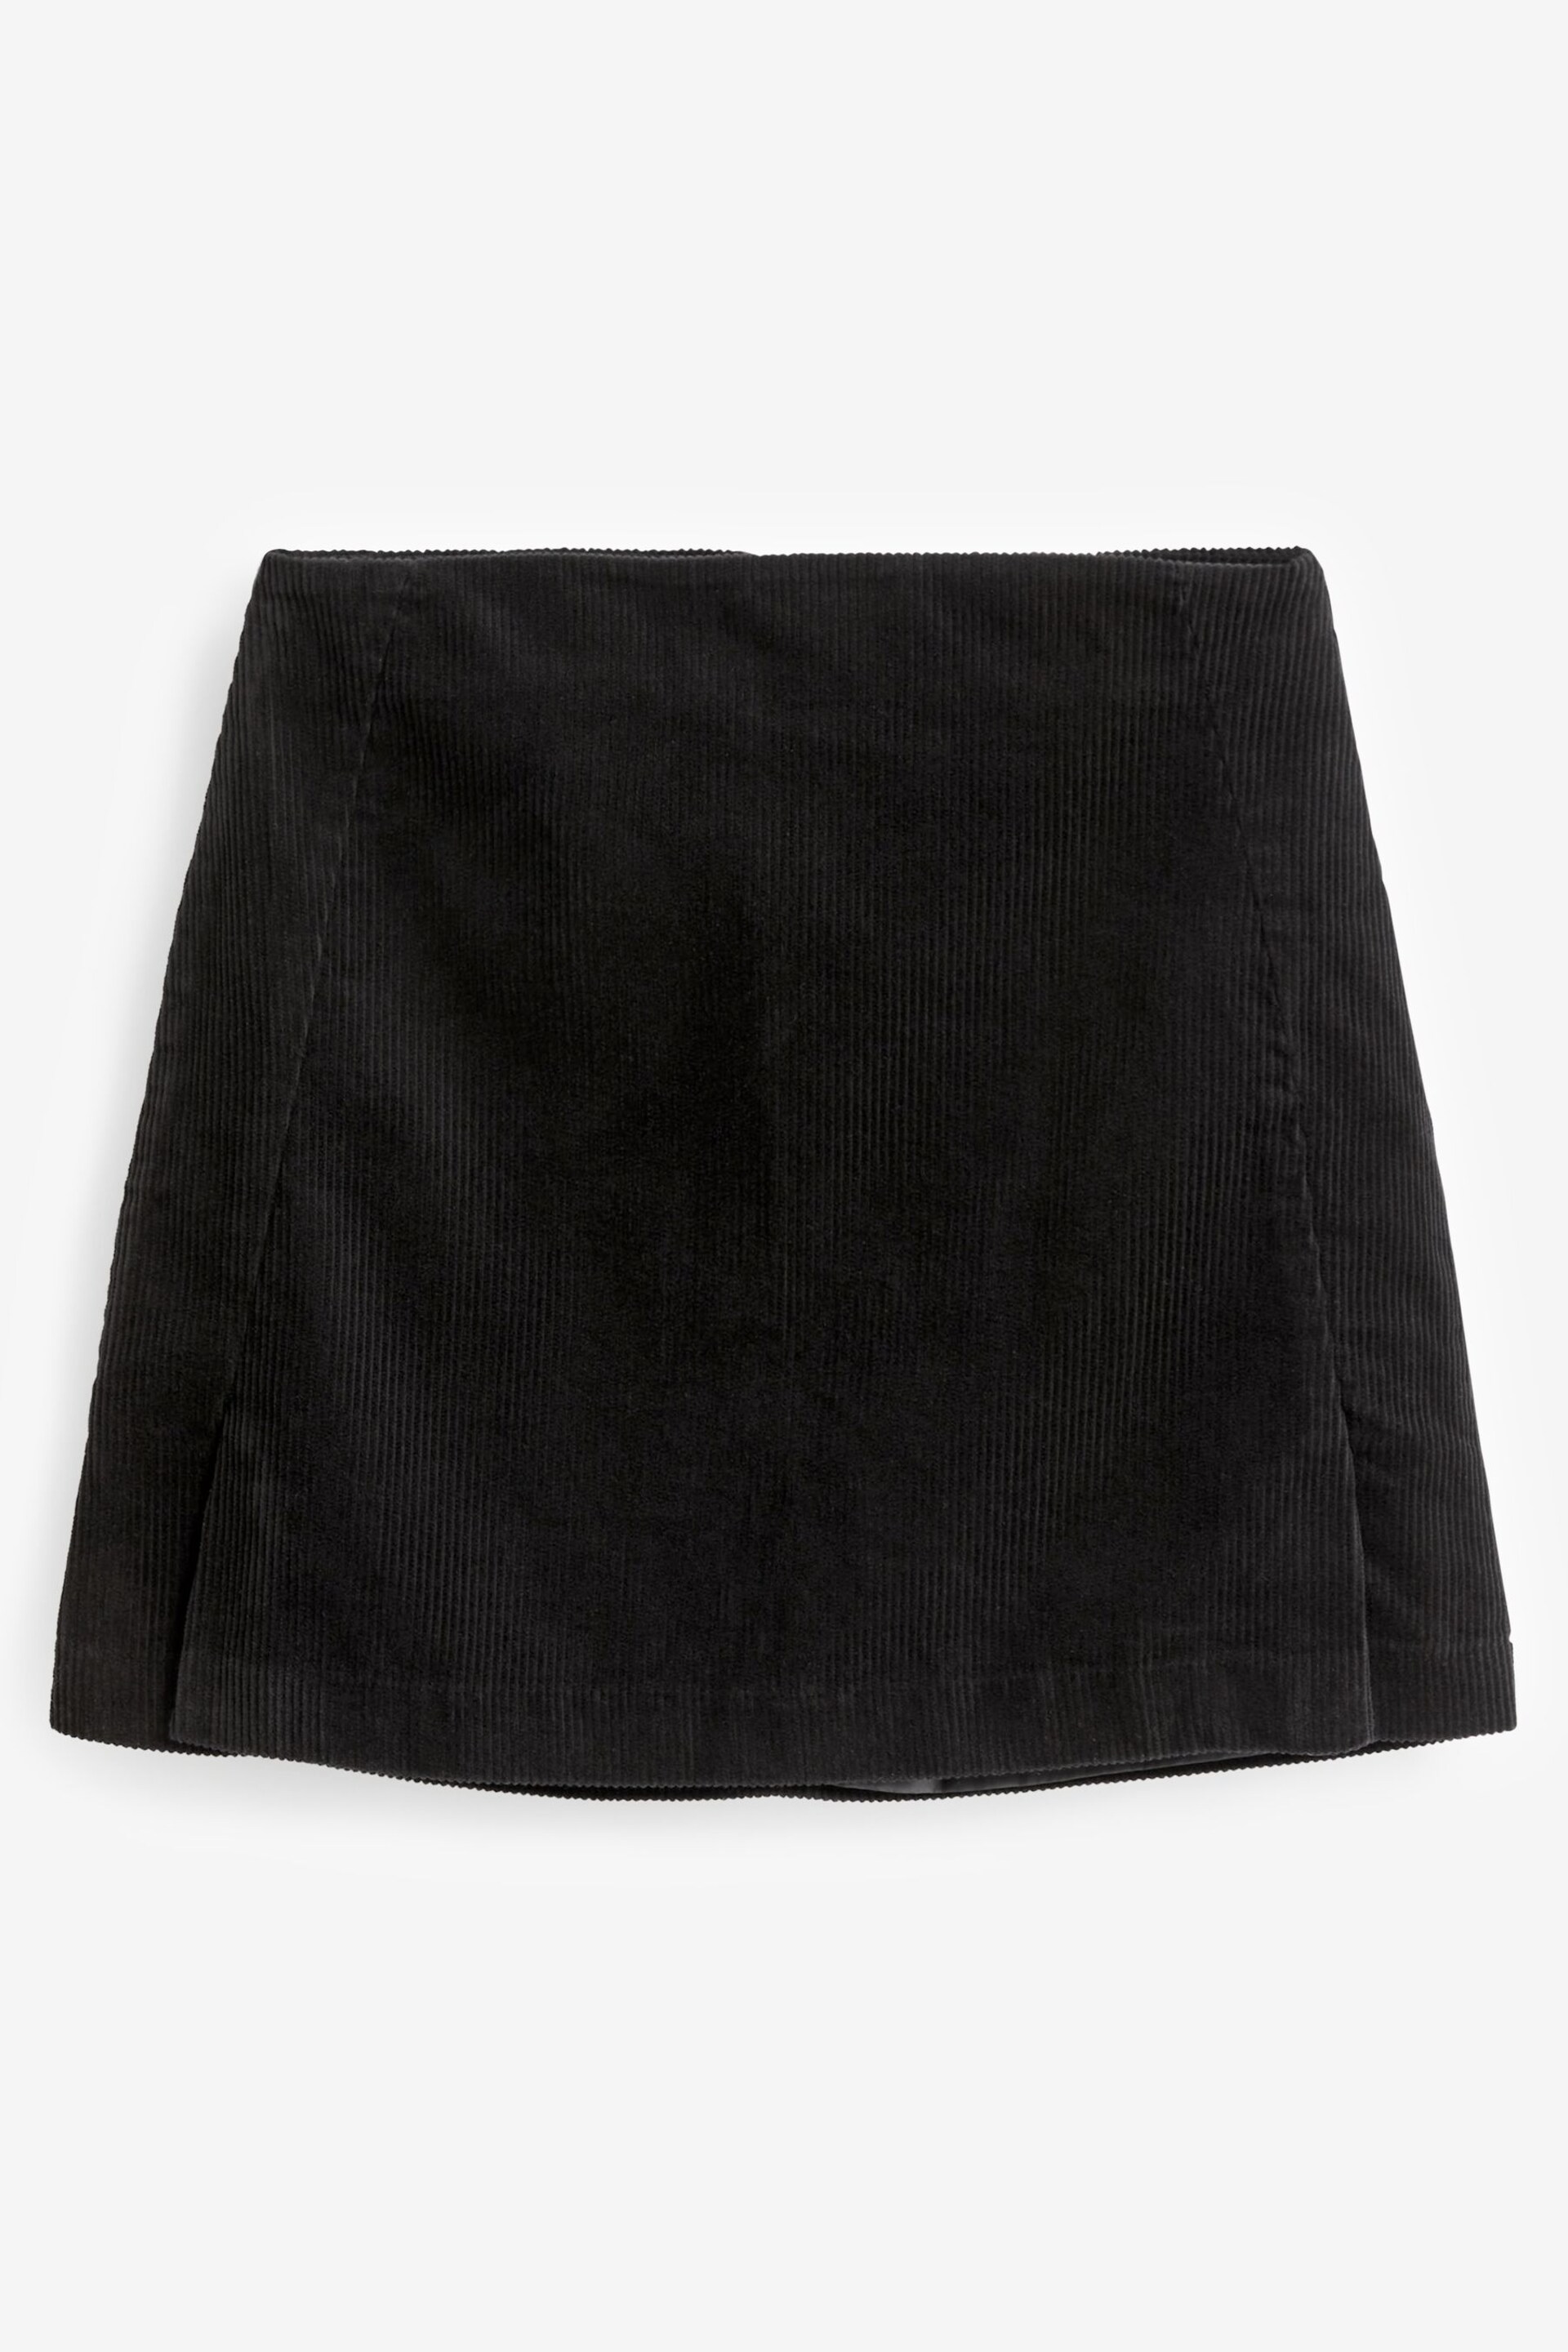 Black Corduroy Mini Skirt - Image 5 of 6